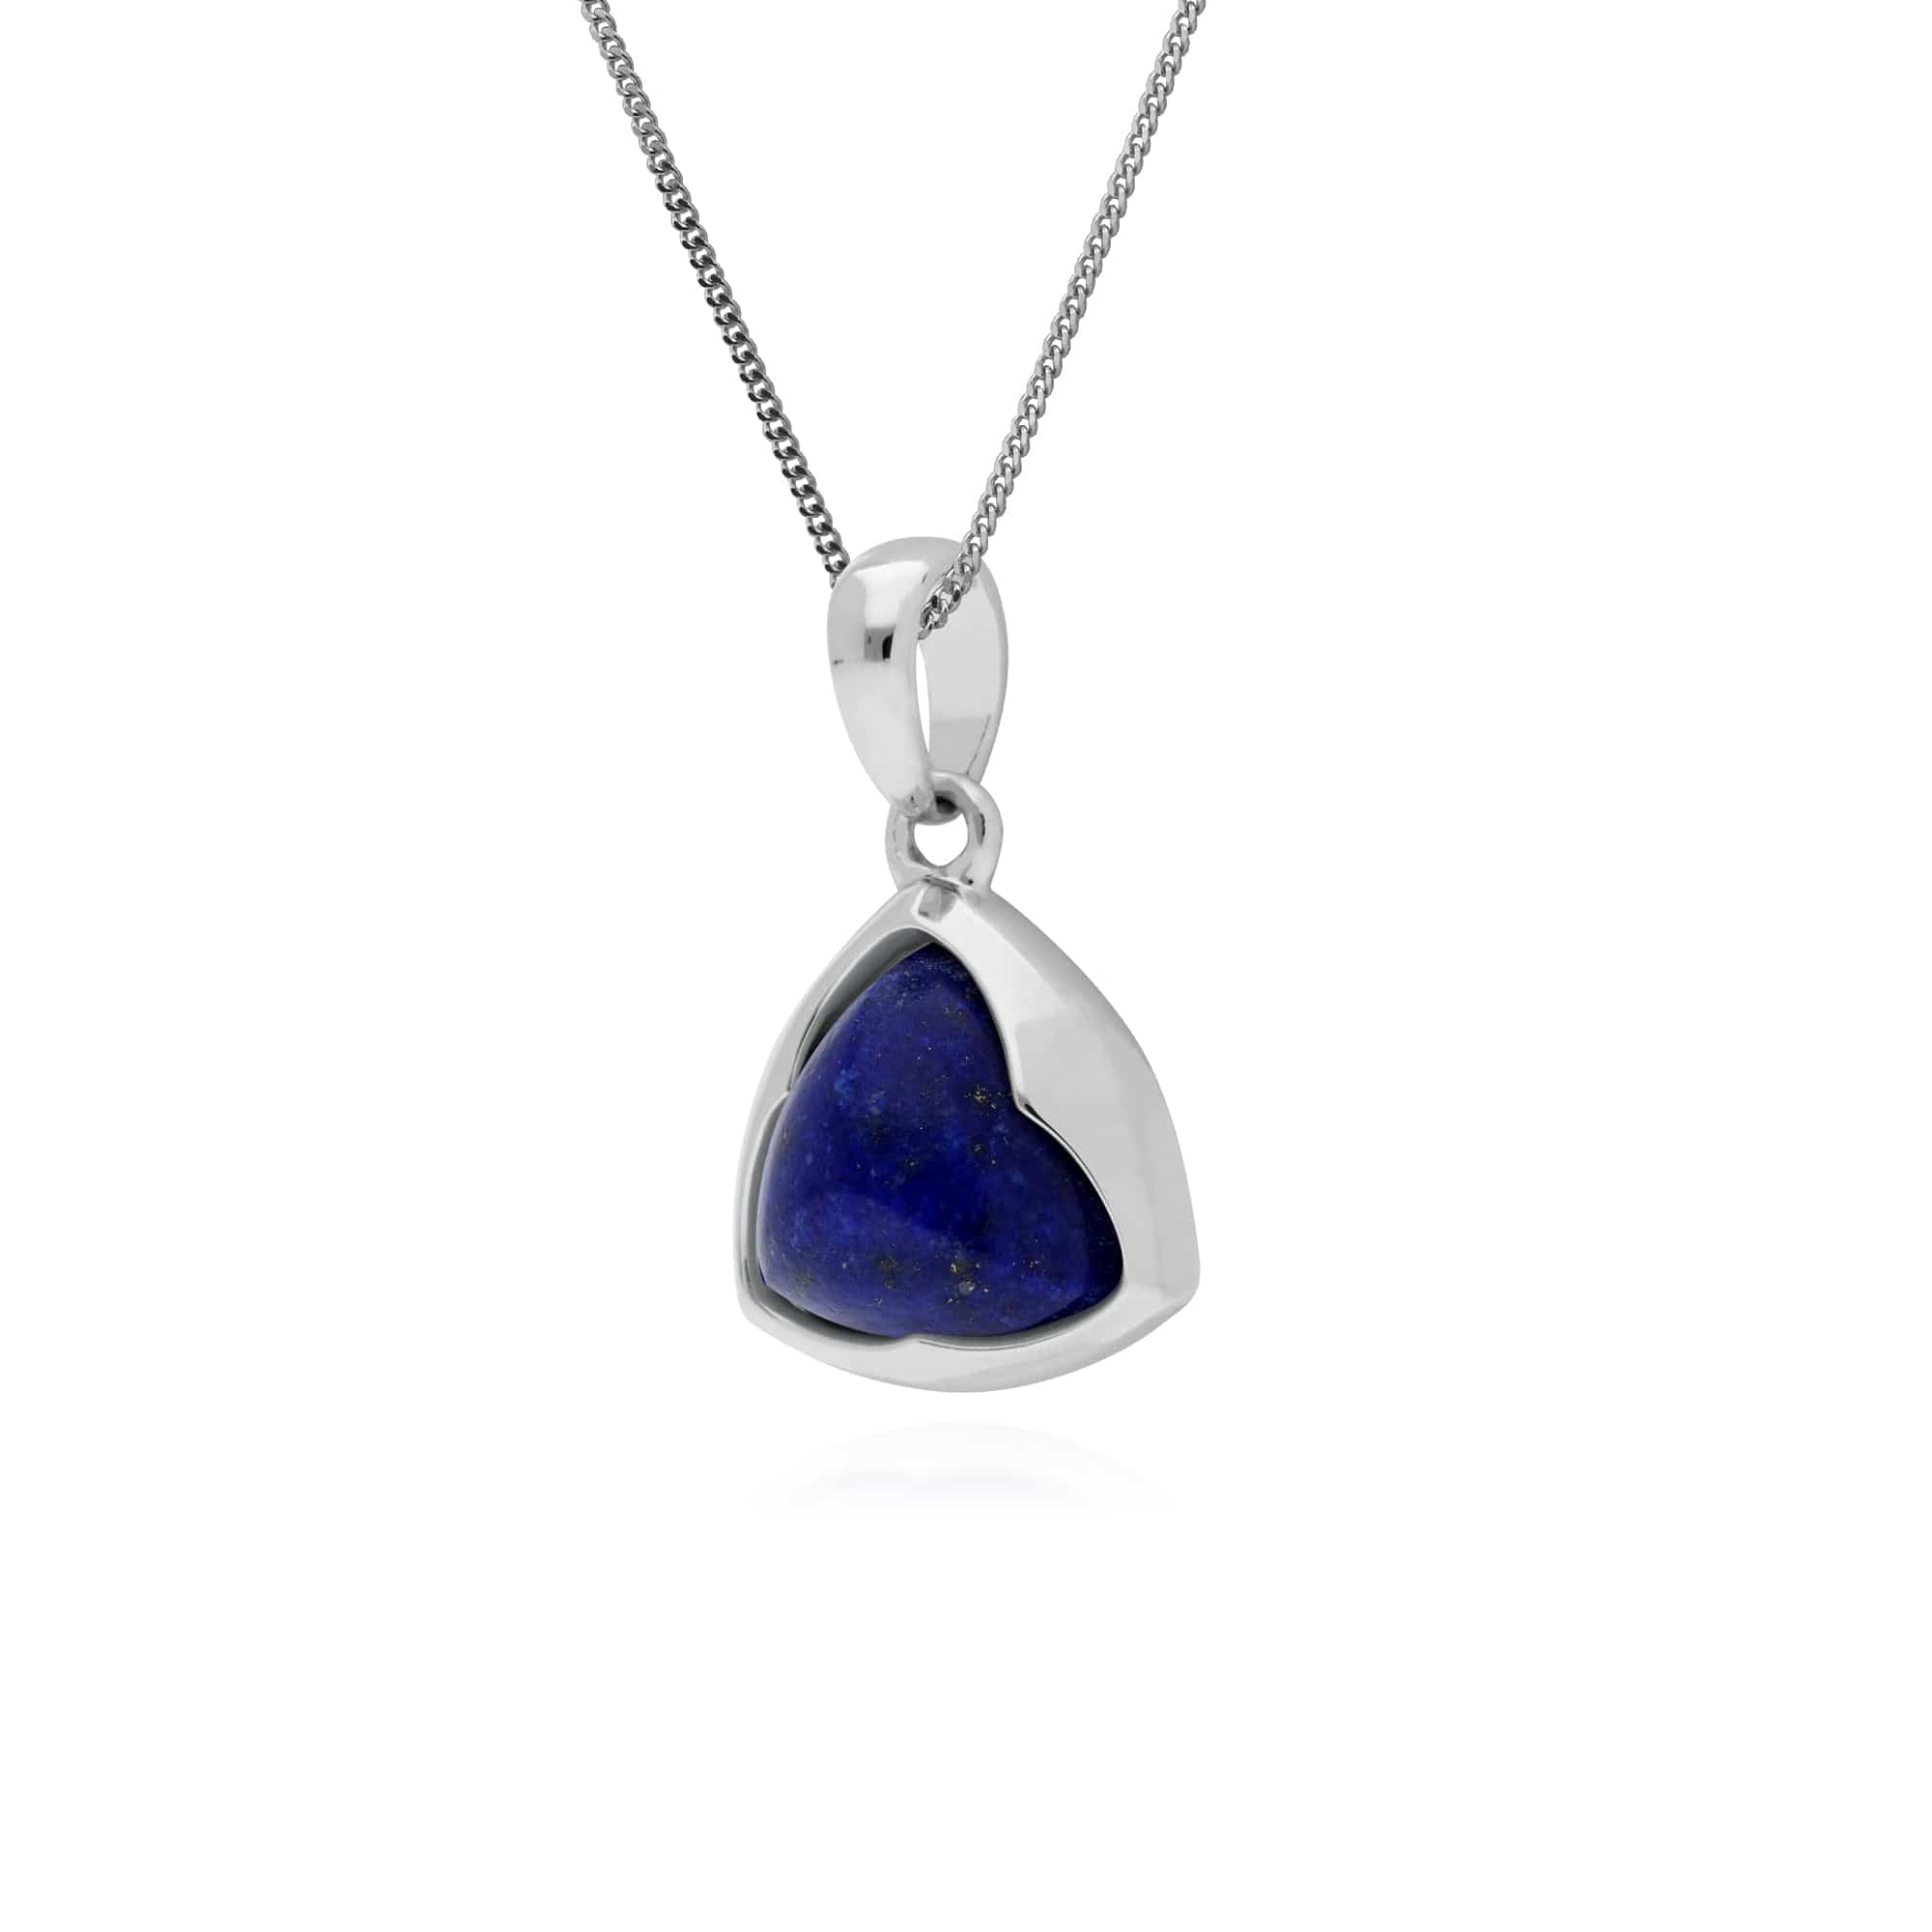 Gemondo Sterling Silver Prism Sugarloaf Lapis Lazuli Pendant on 45cm Chain - Gemondo